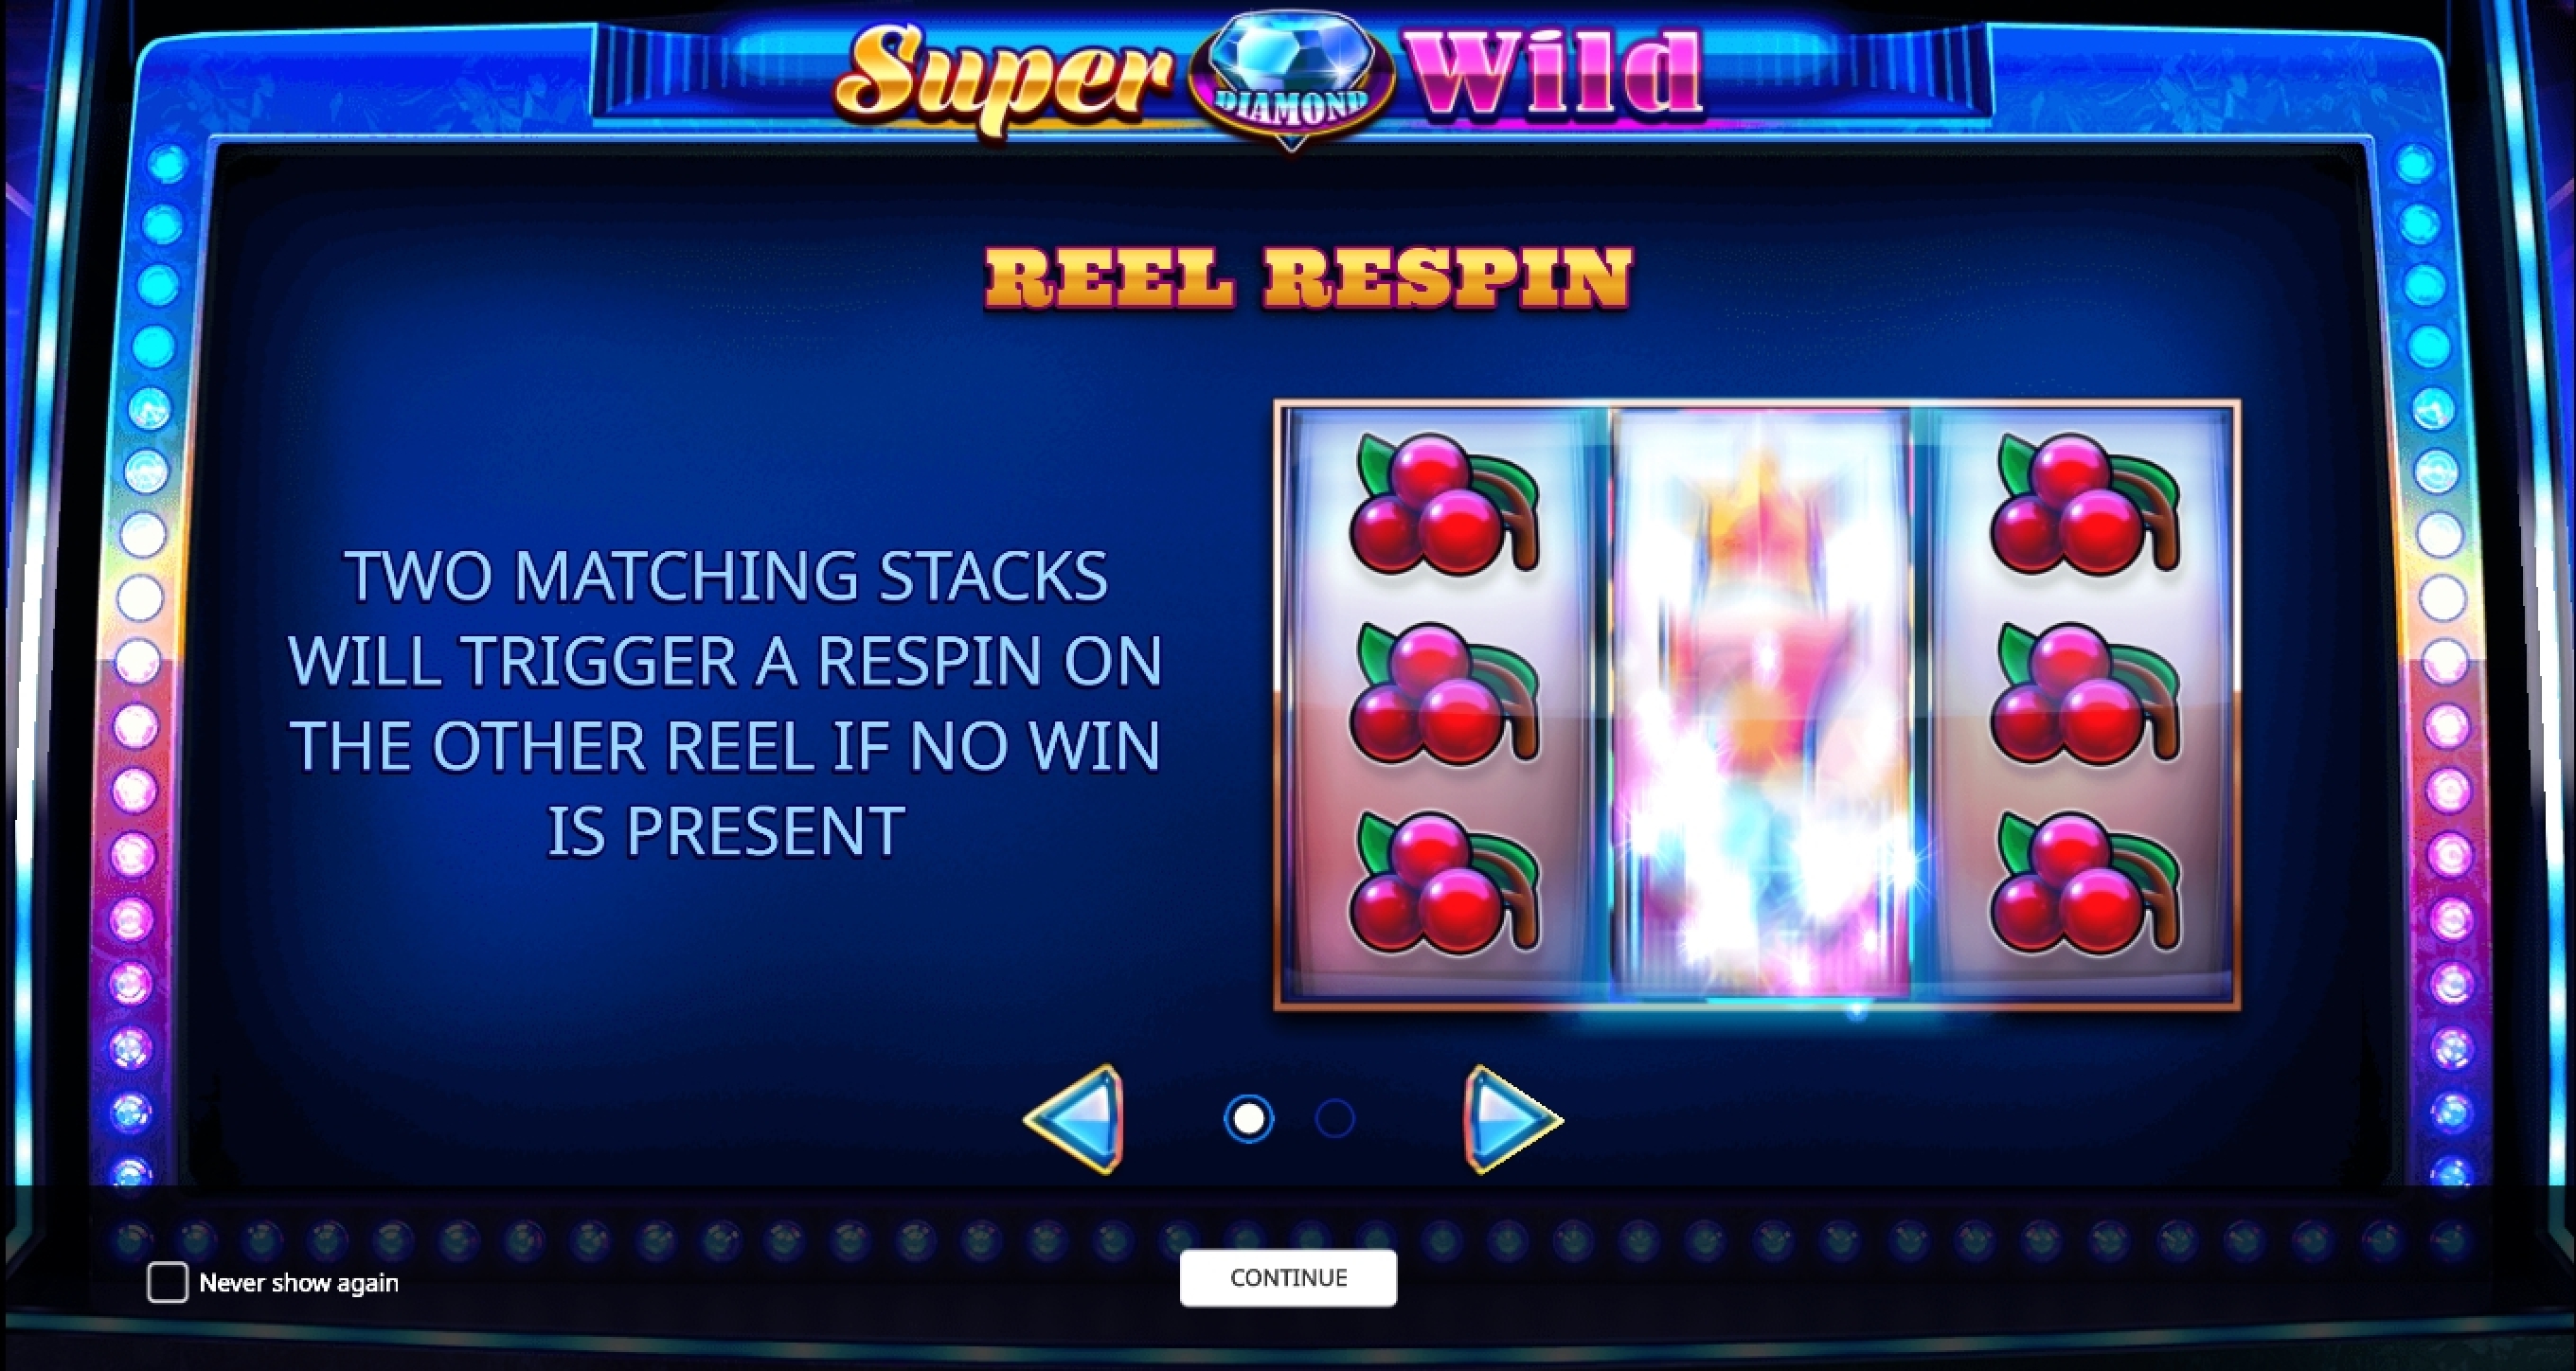 Play Super Diamond Wild Free Casino Slot Game by iSoftBet